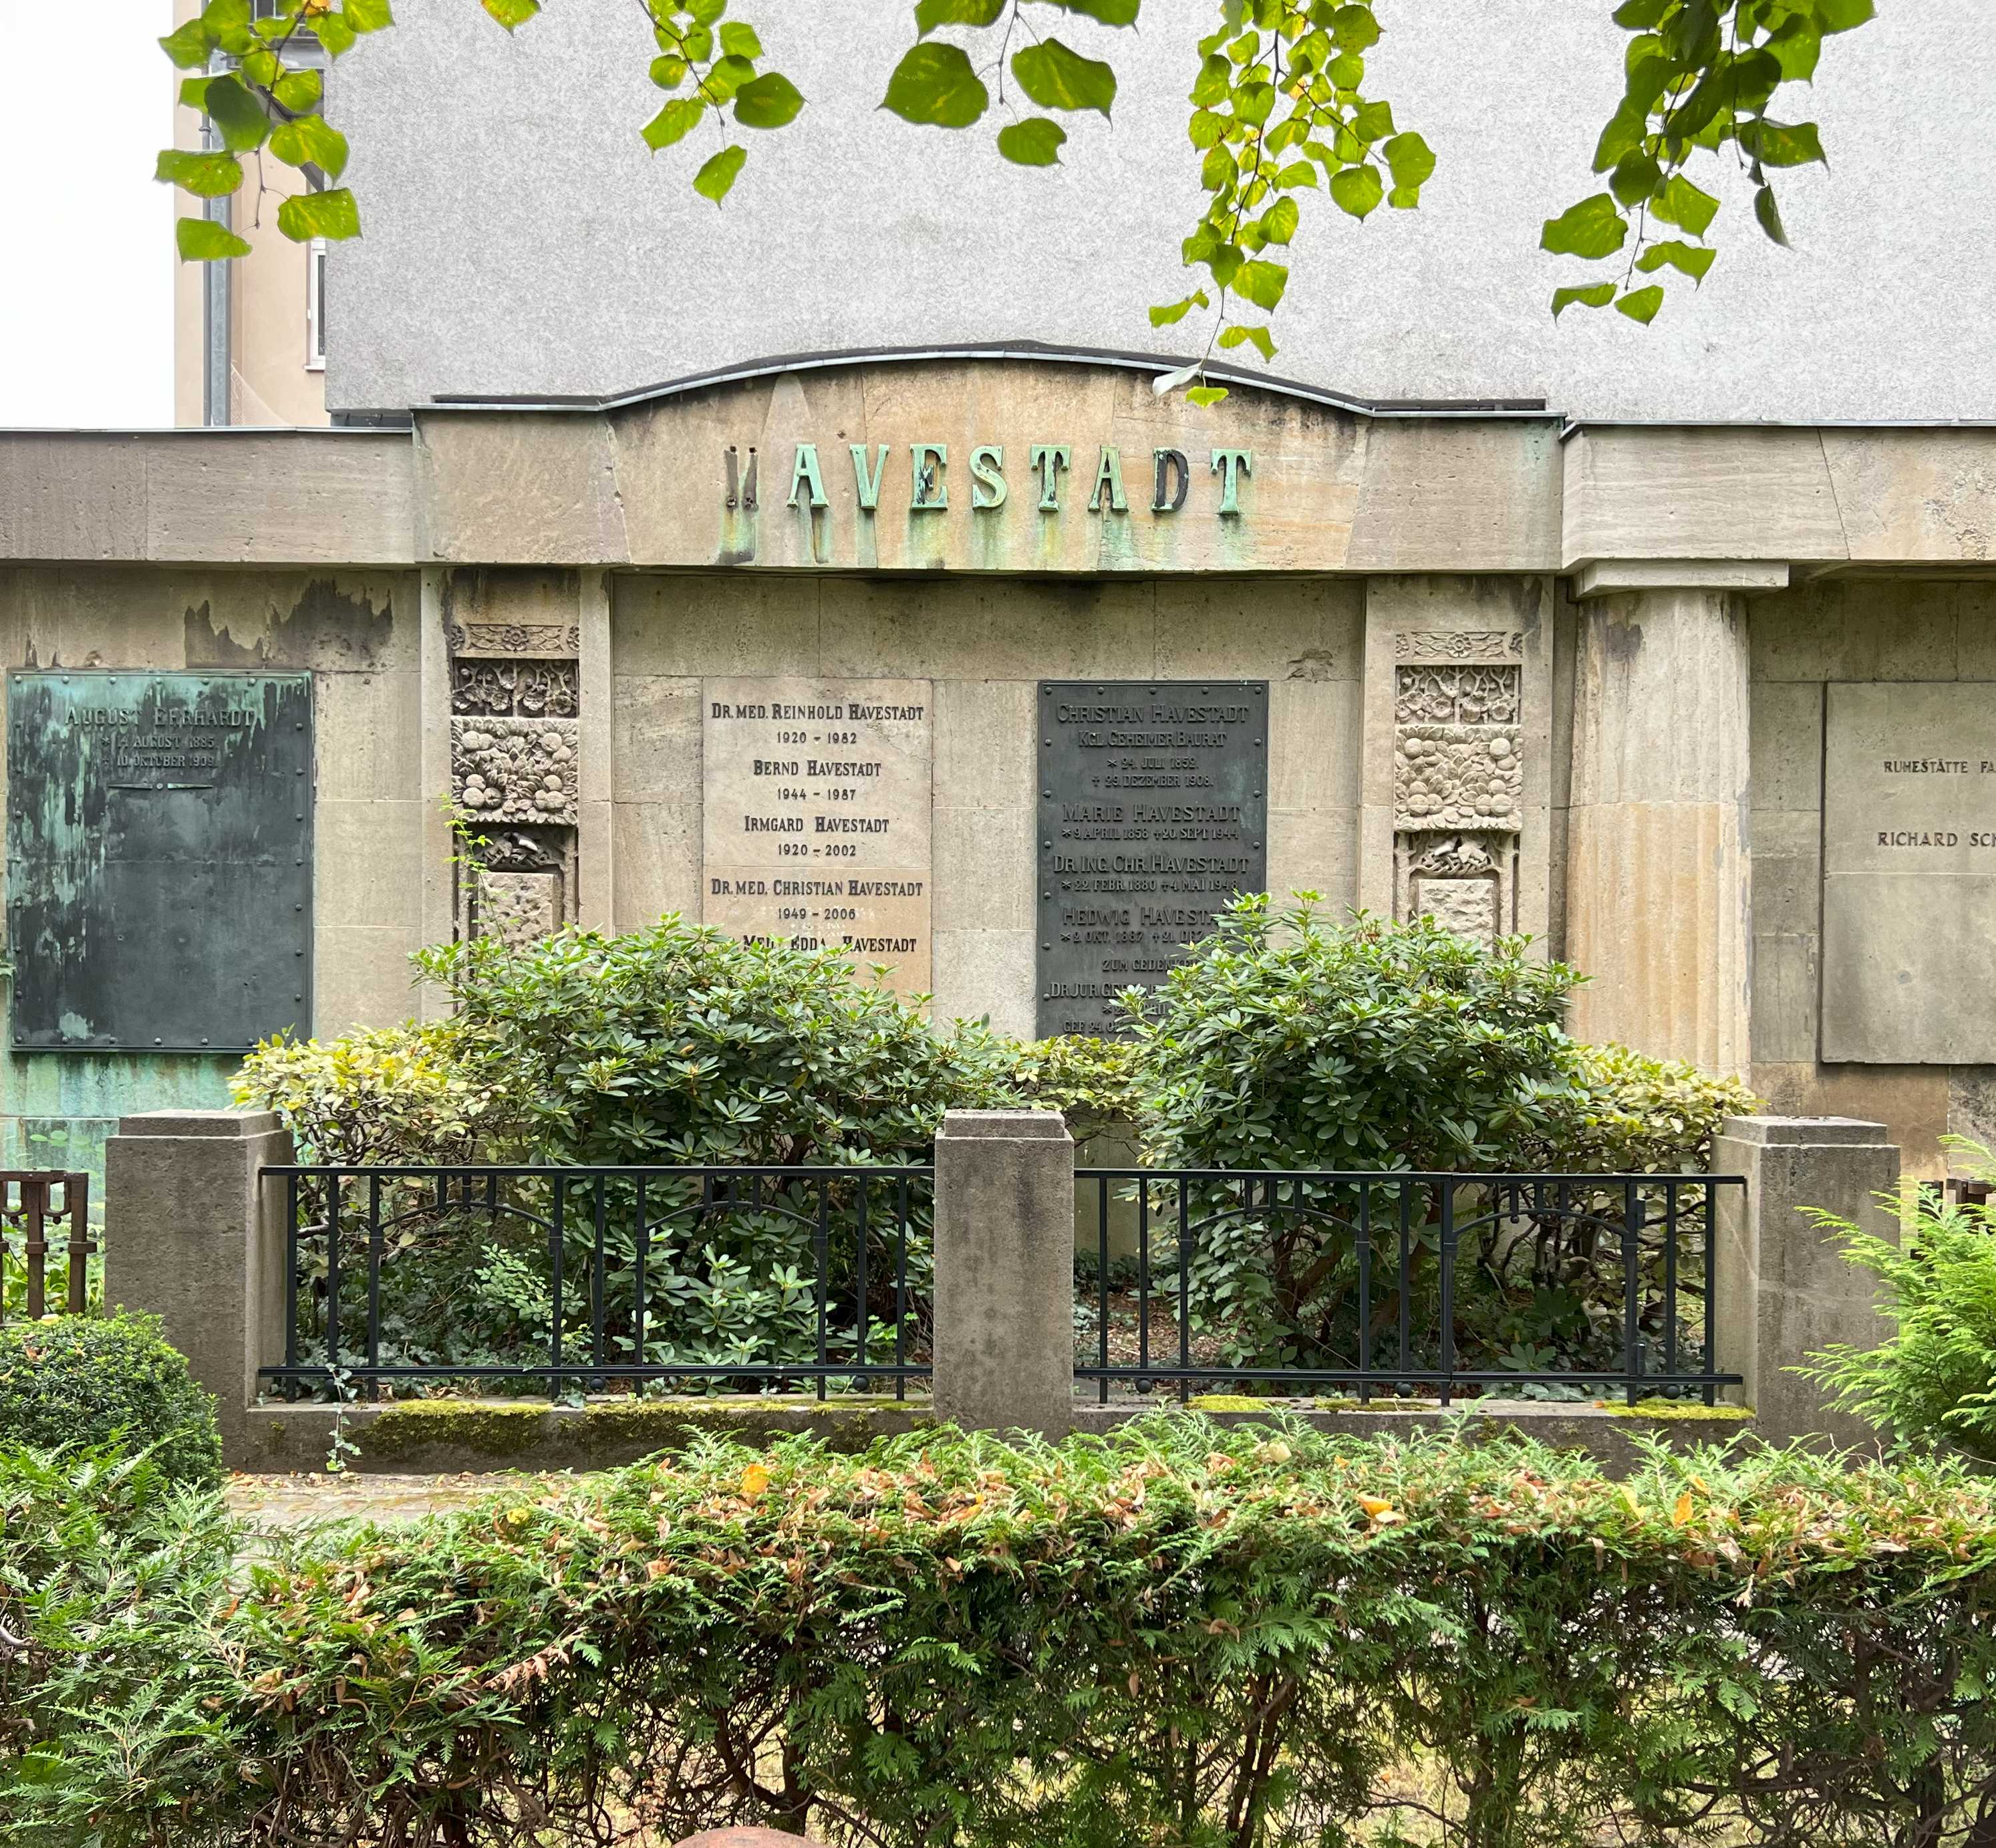 Grabstein Hedwig Havestadt, Friedhof Wilmersdorf, Berlin